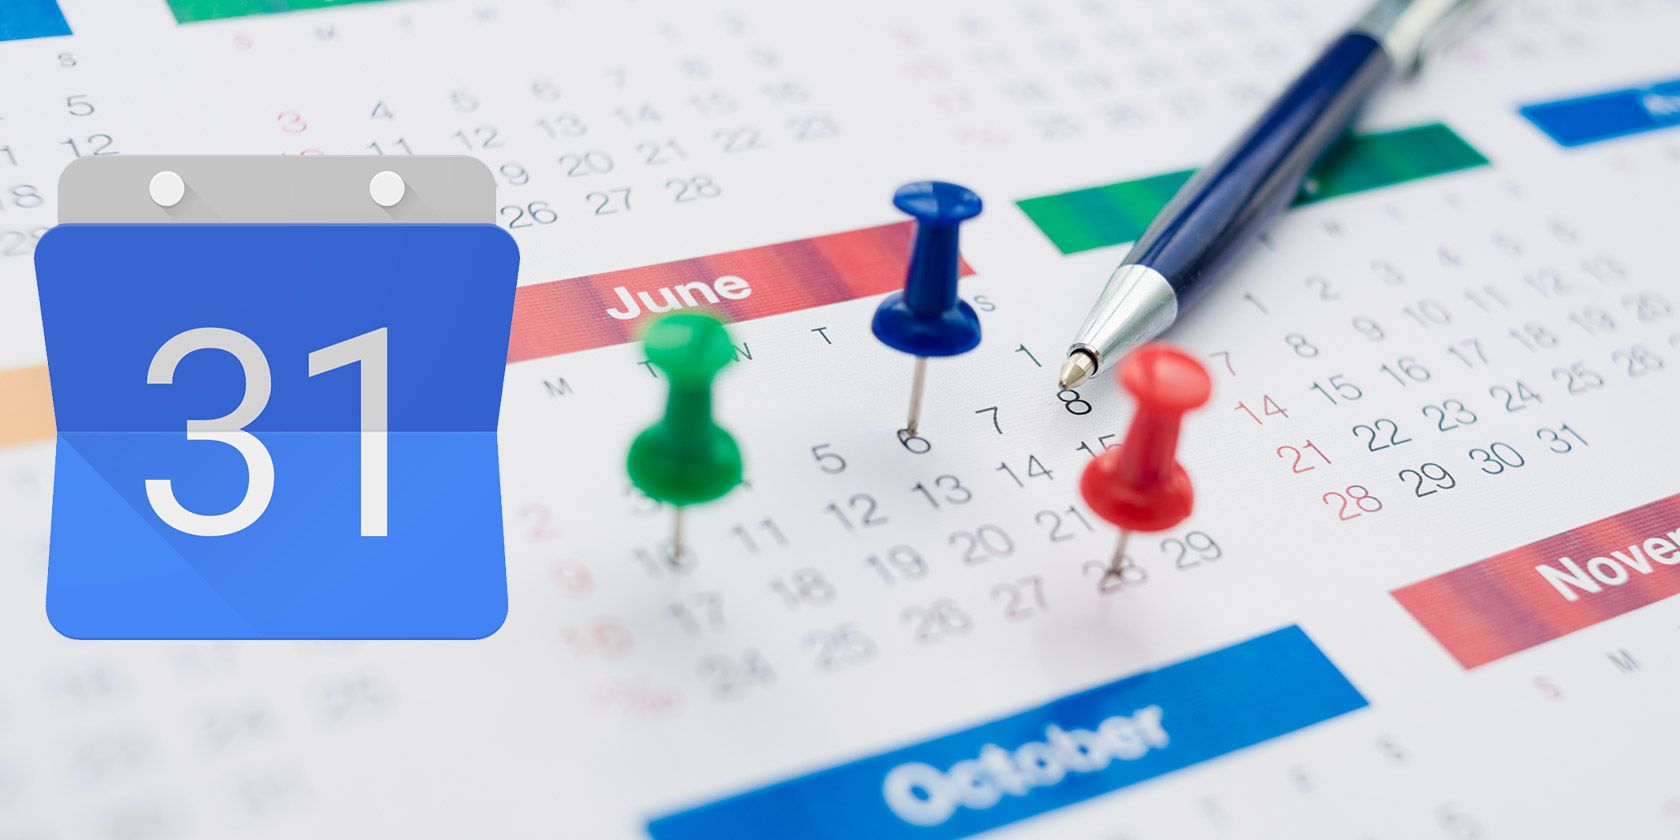 How to Make Google Calendar Collaboration Even Smarter